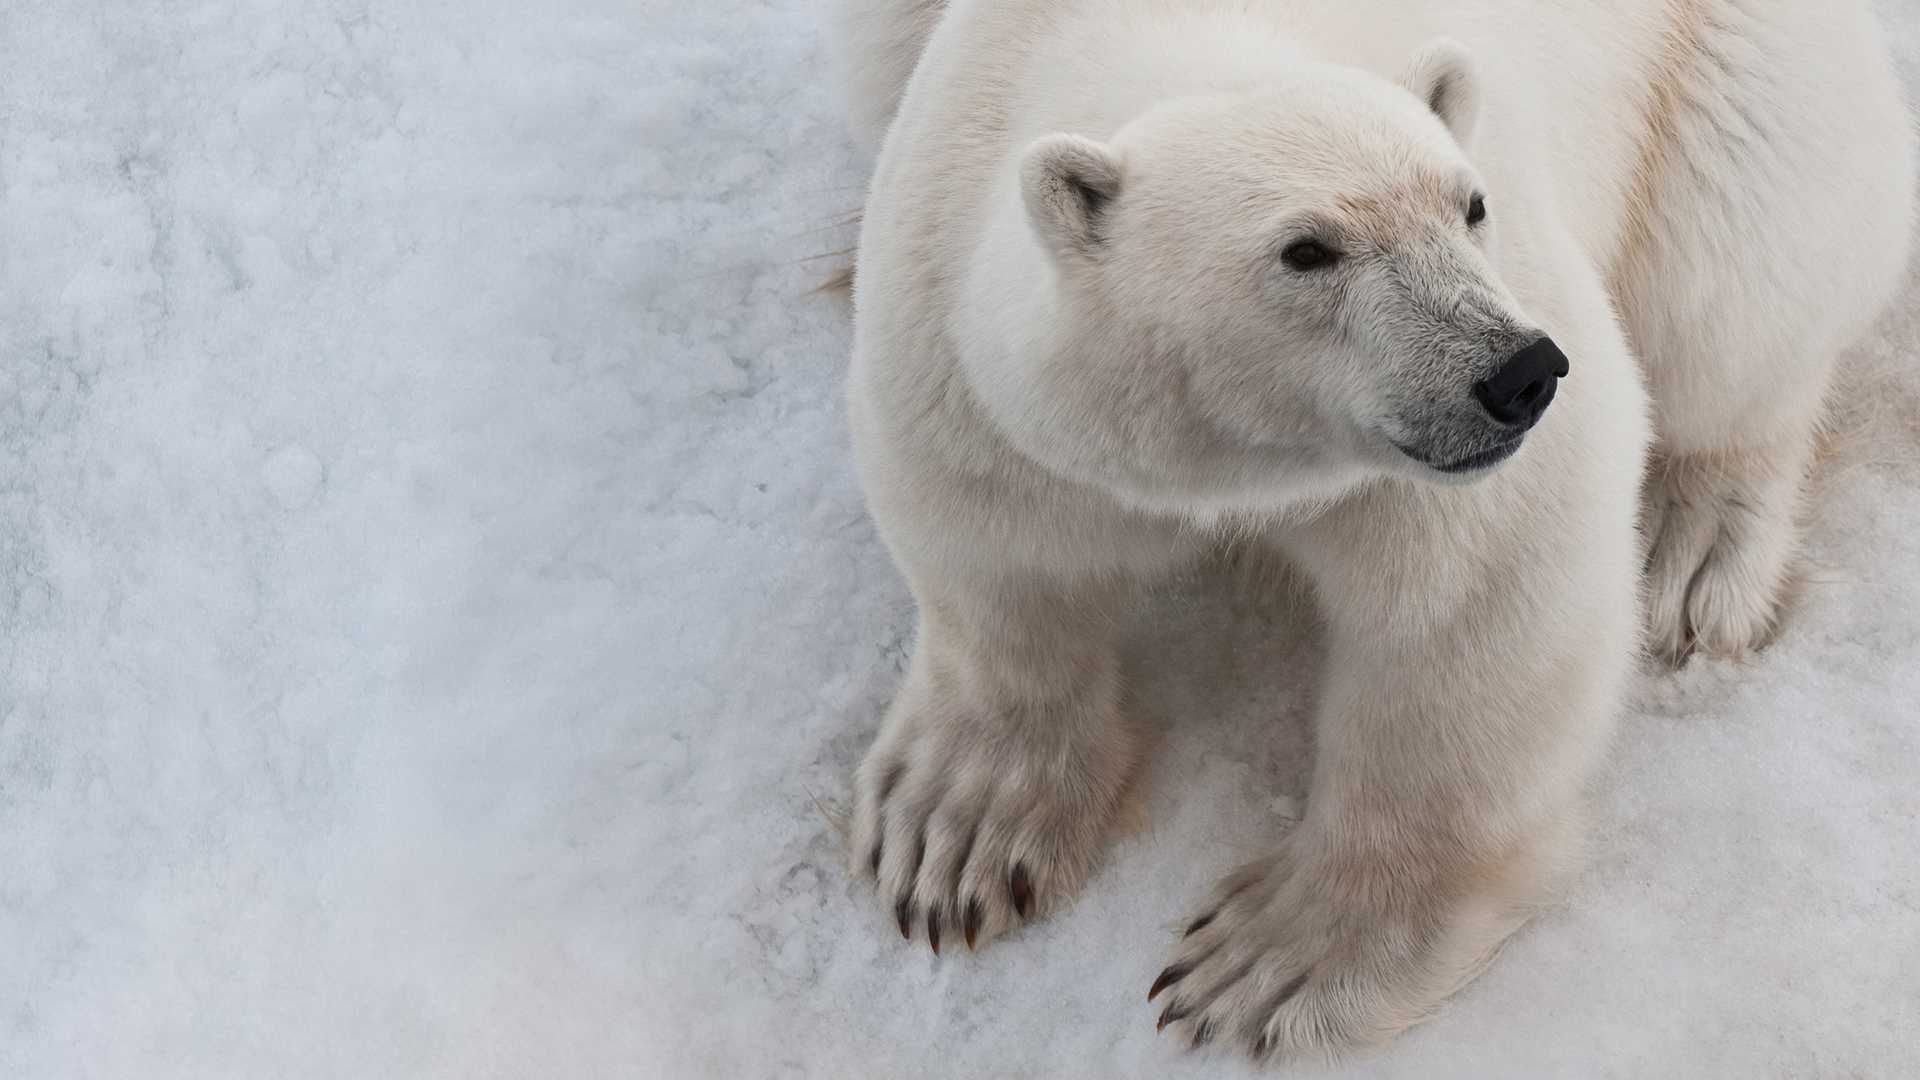 Northwest Passage: Greenland to Alaska 2022 - Polar bear